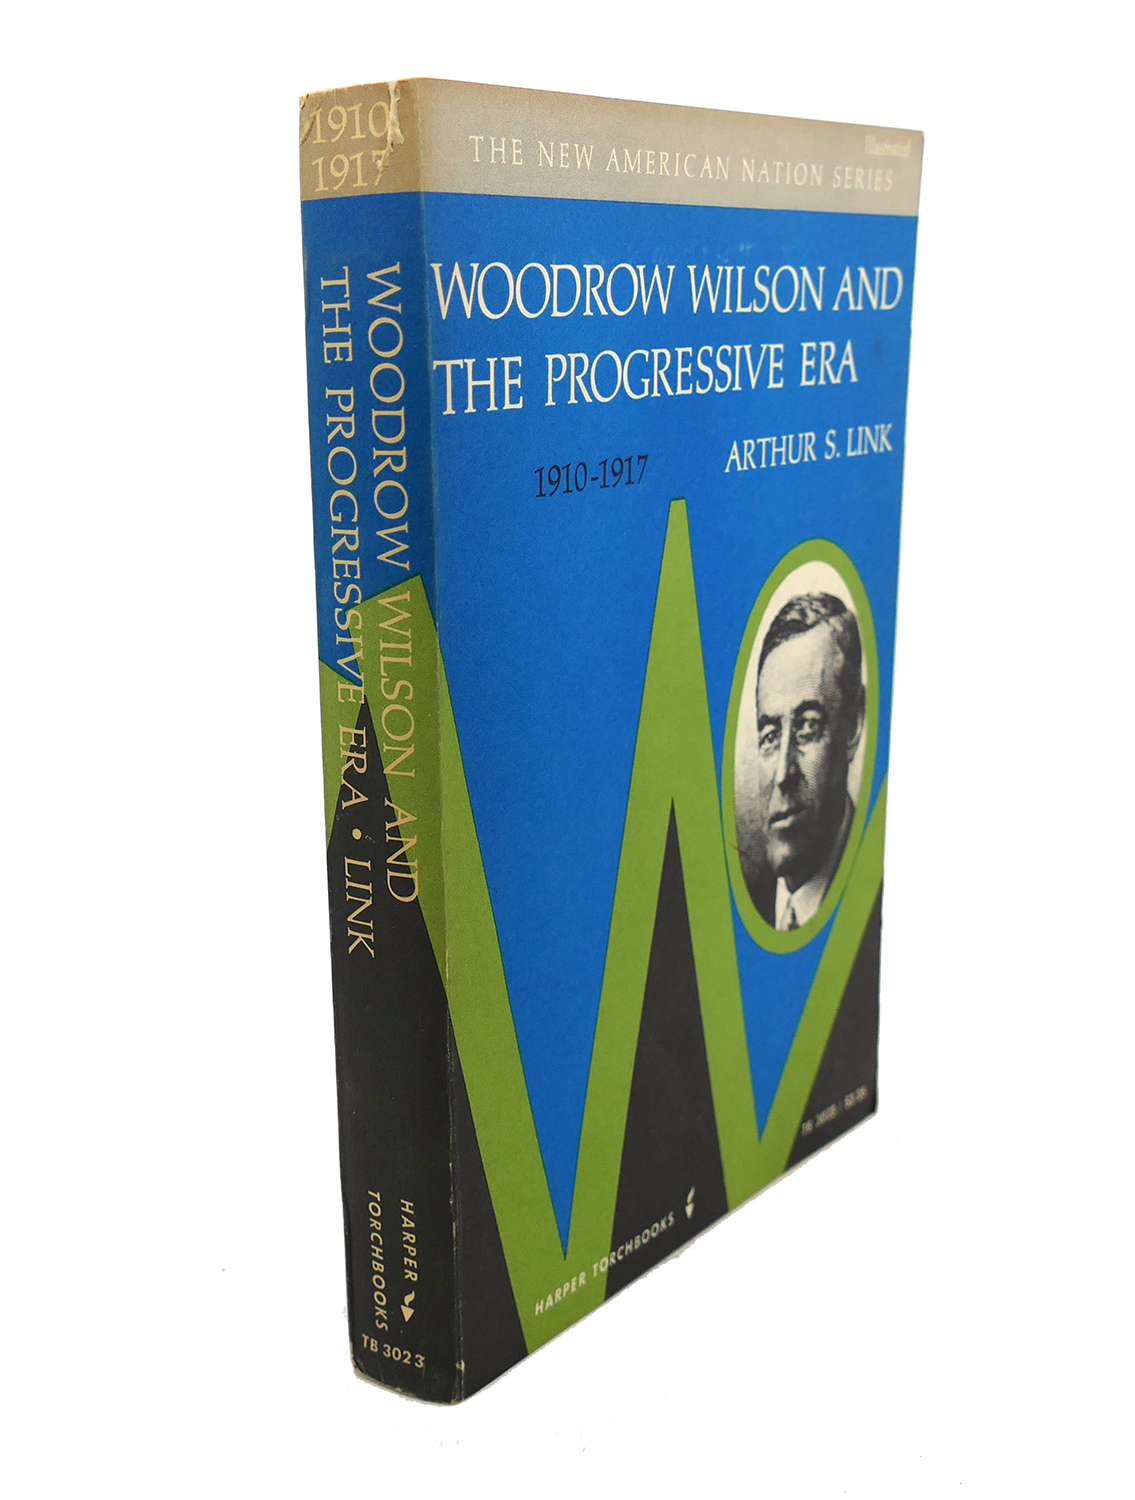 WOODROW WILSON AND THE PROGRESSIVE ERA, 1910-1917 by Arthur S. Link ...